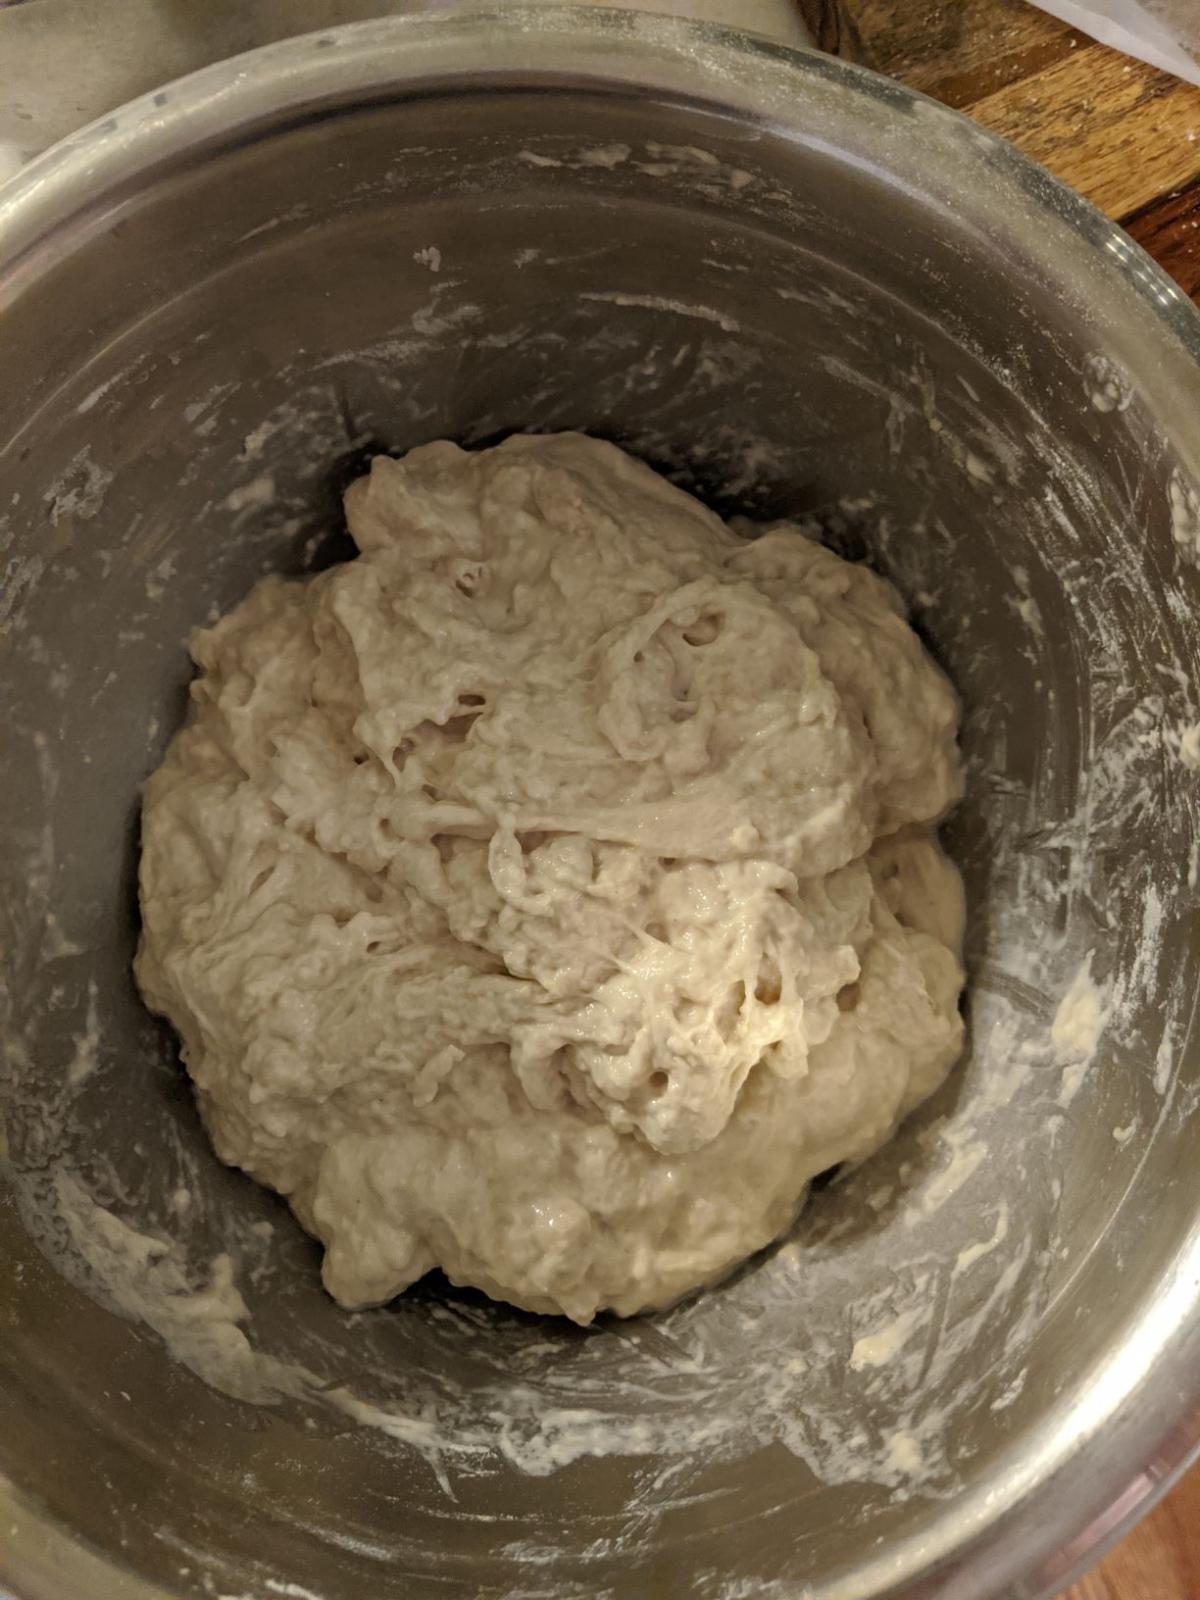 Freshly mixed dough